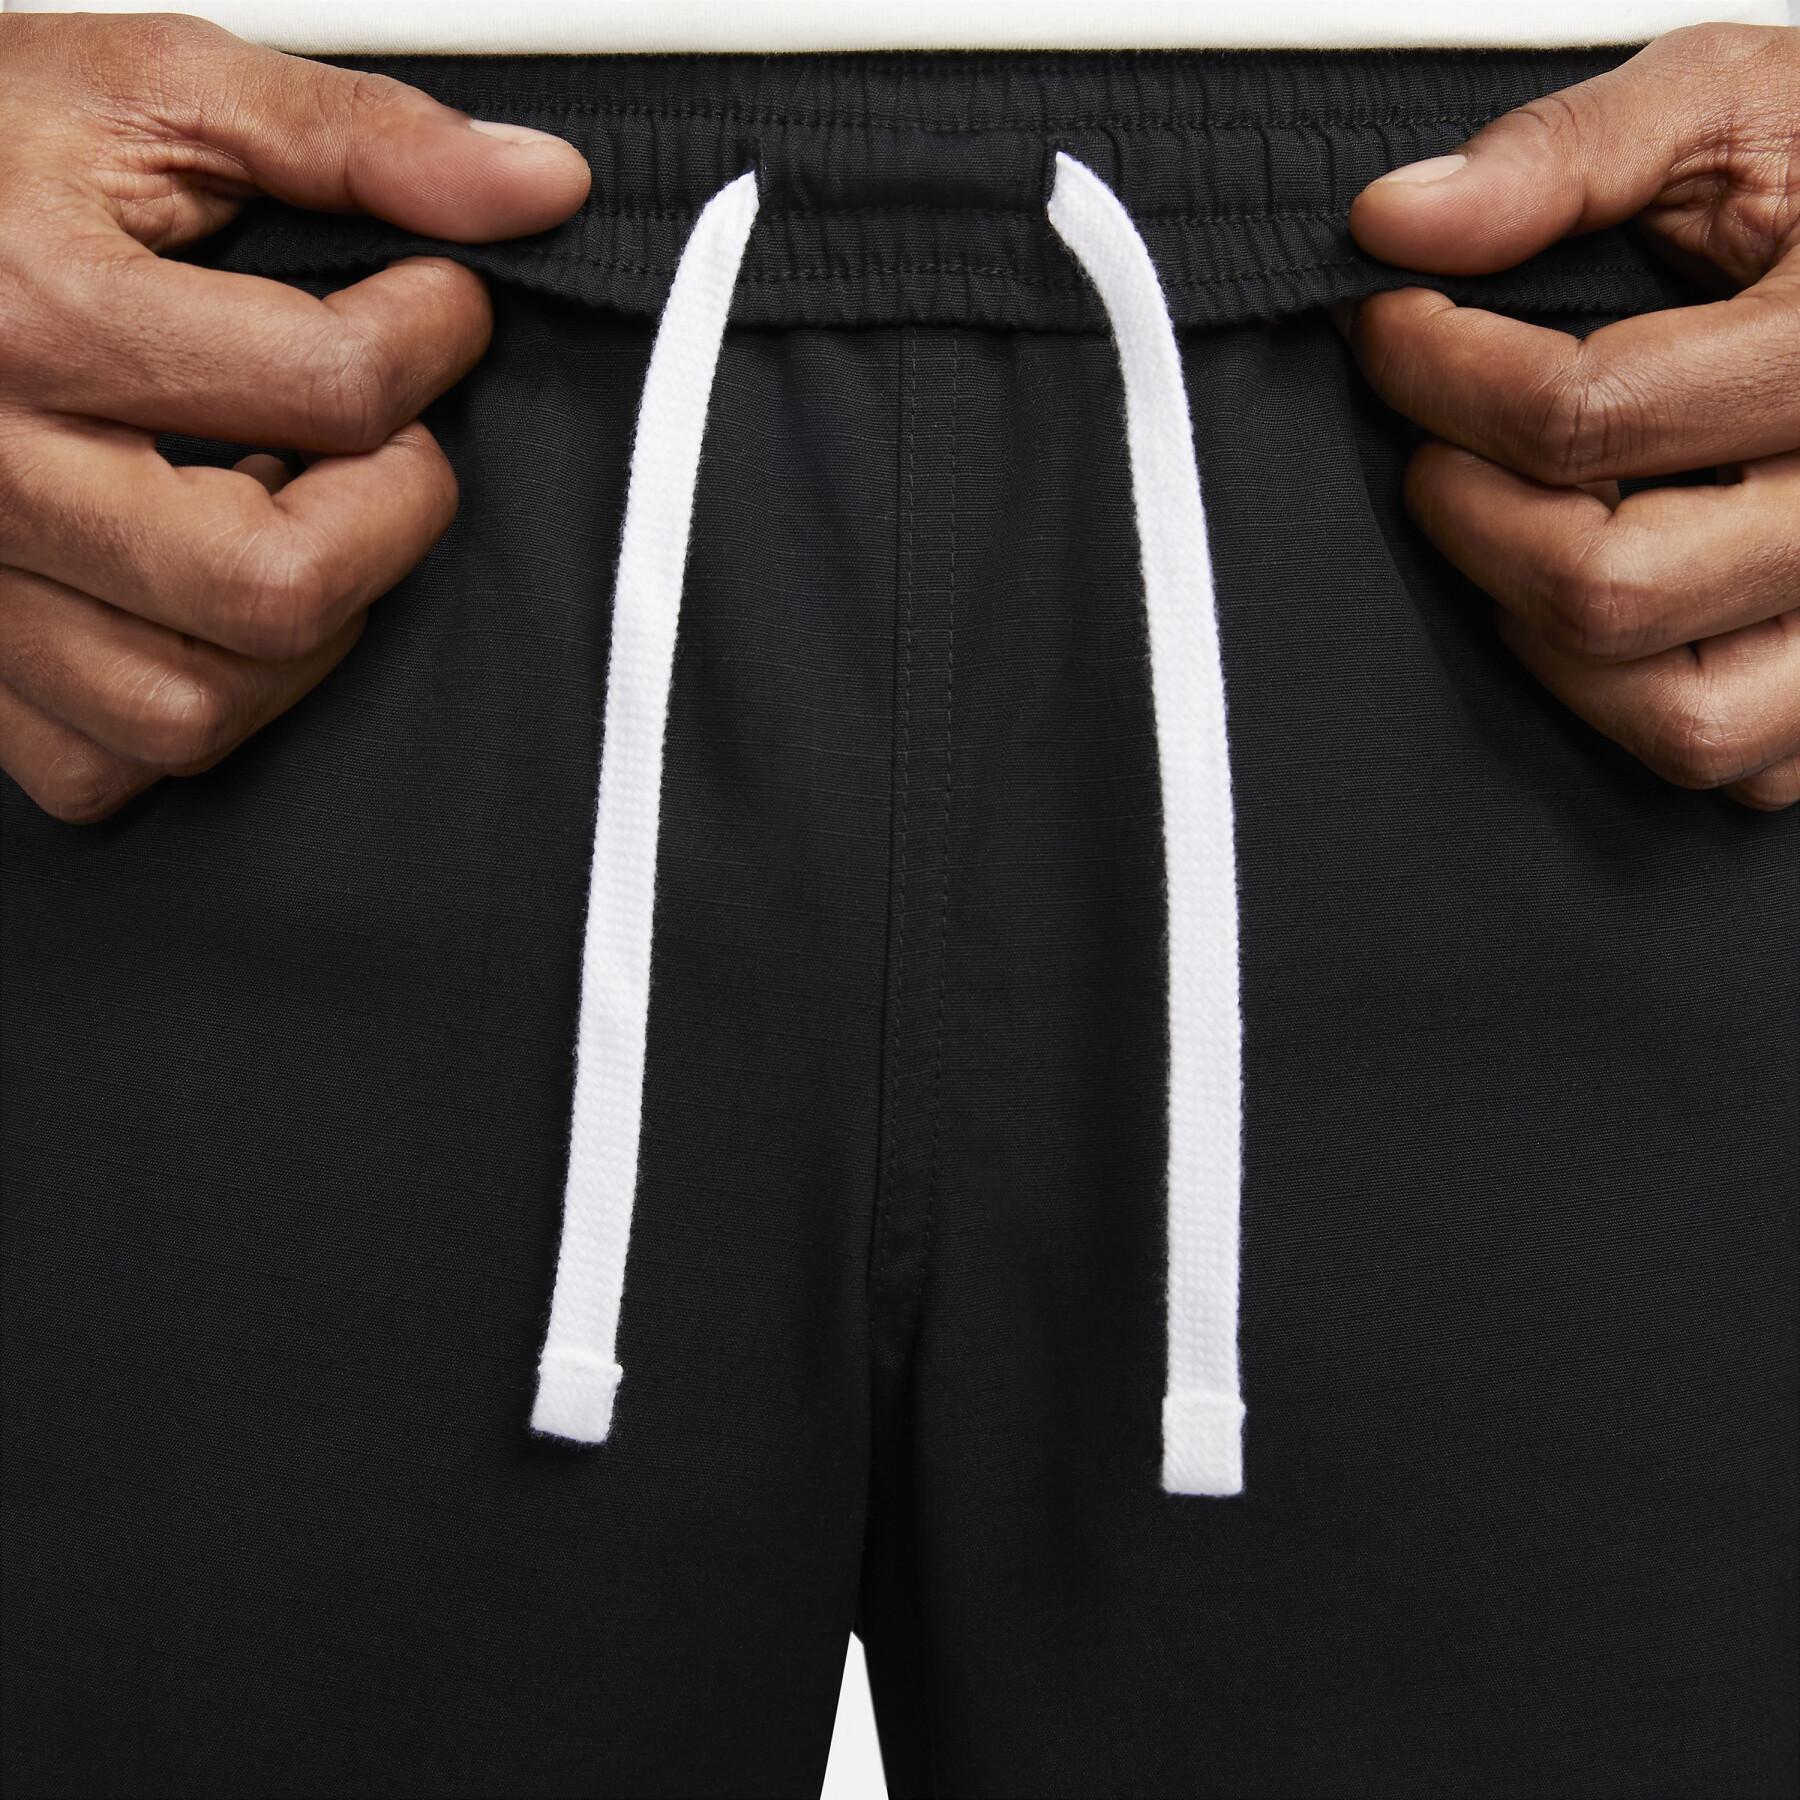 Pantalon cargo tissé Nike Club